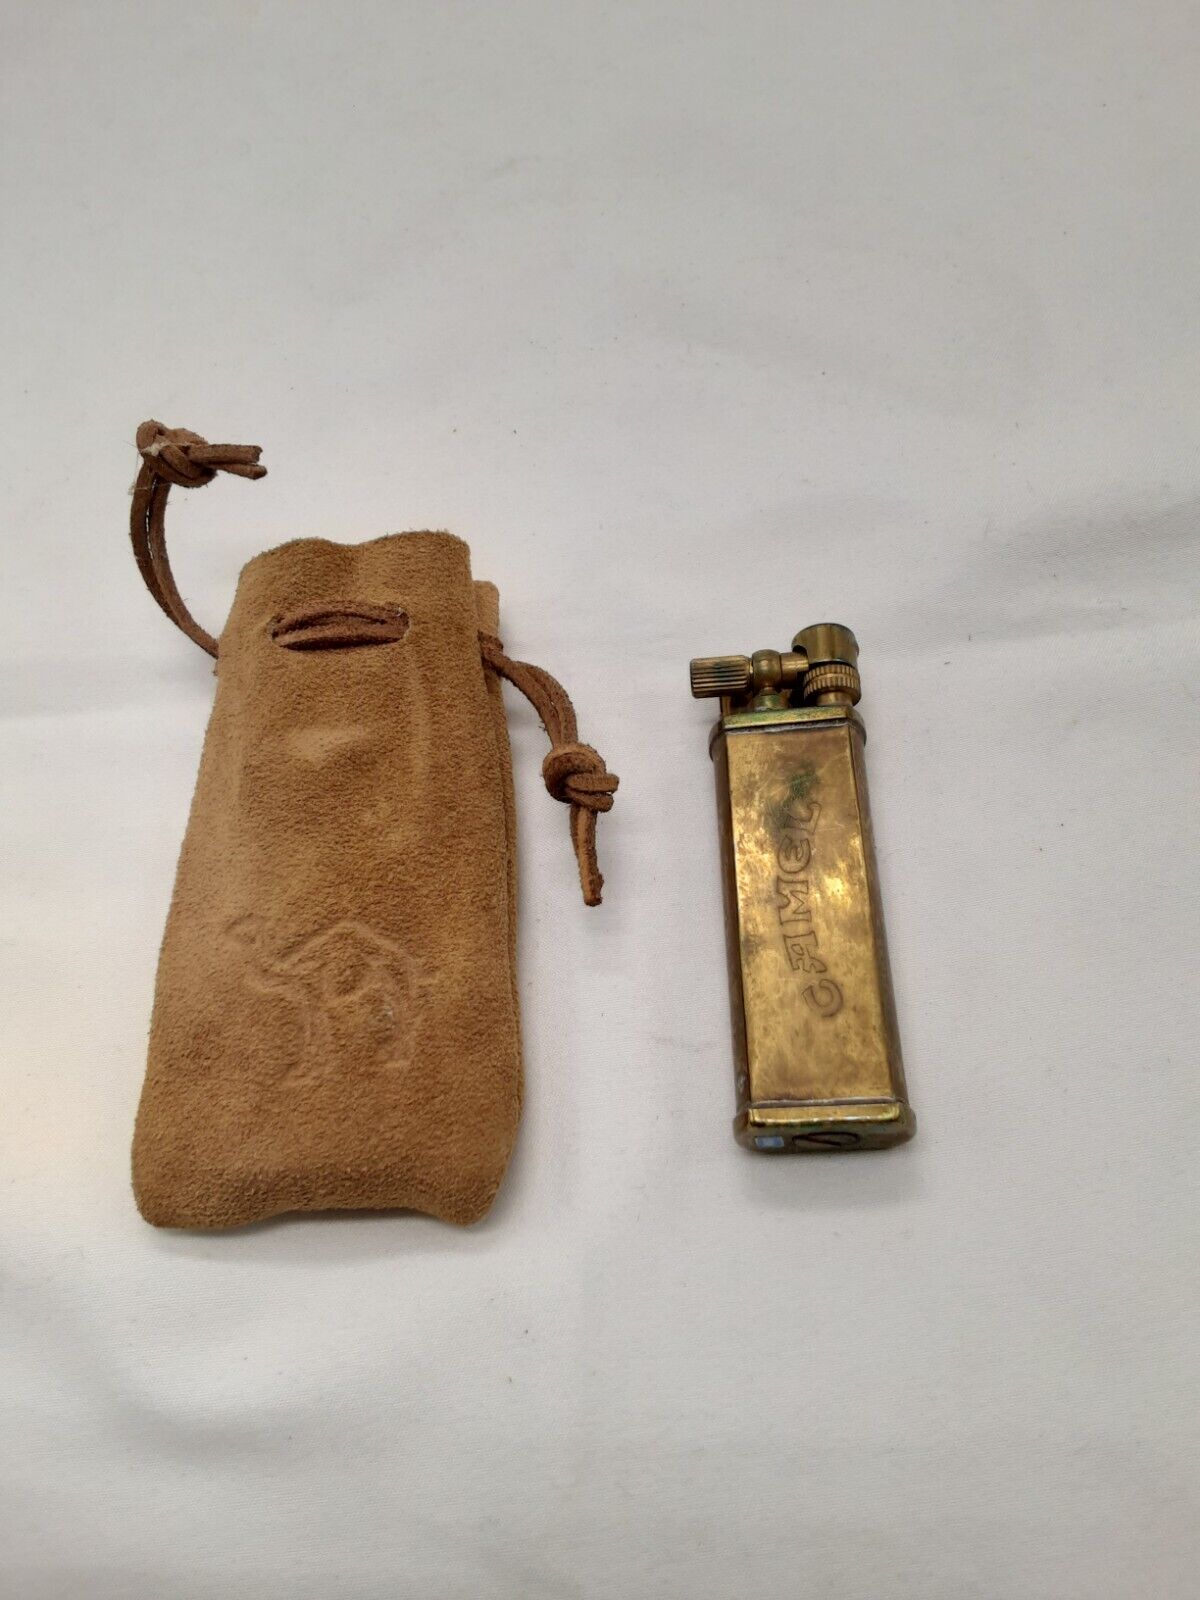 Ultra Rare Antique Brass Lift Arm Camel Cigarette Lighter